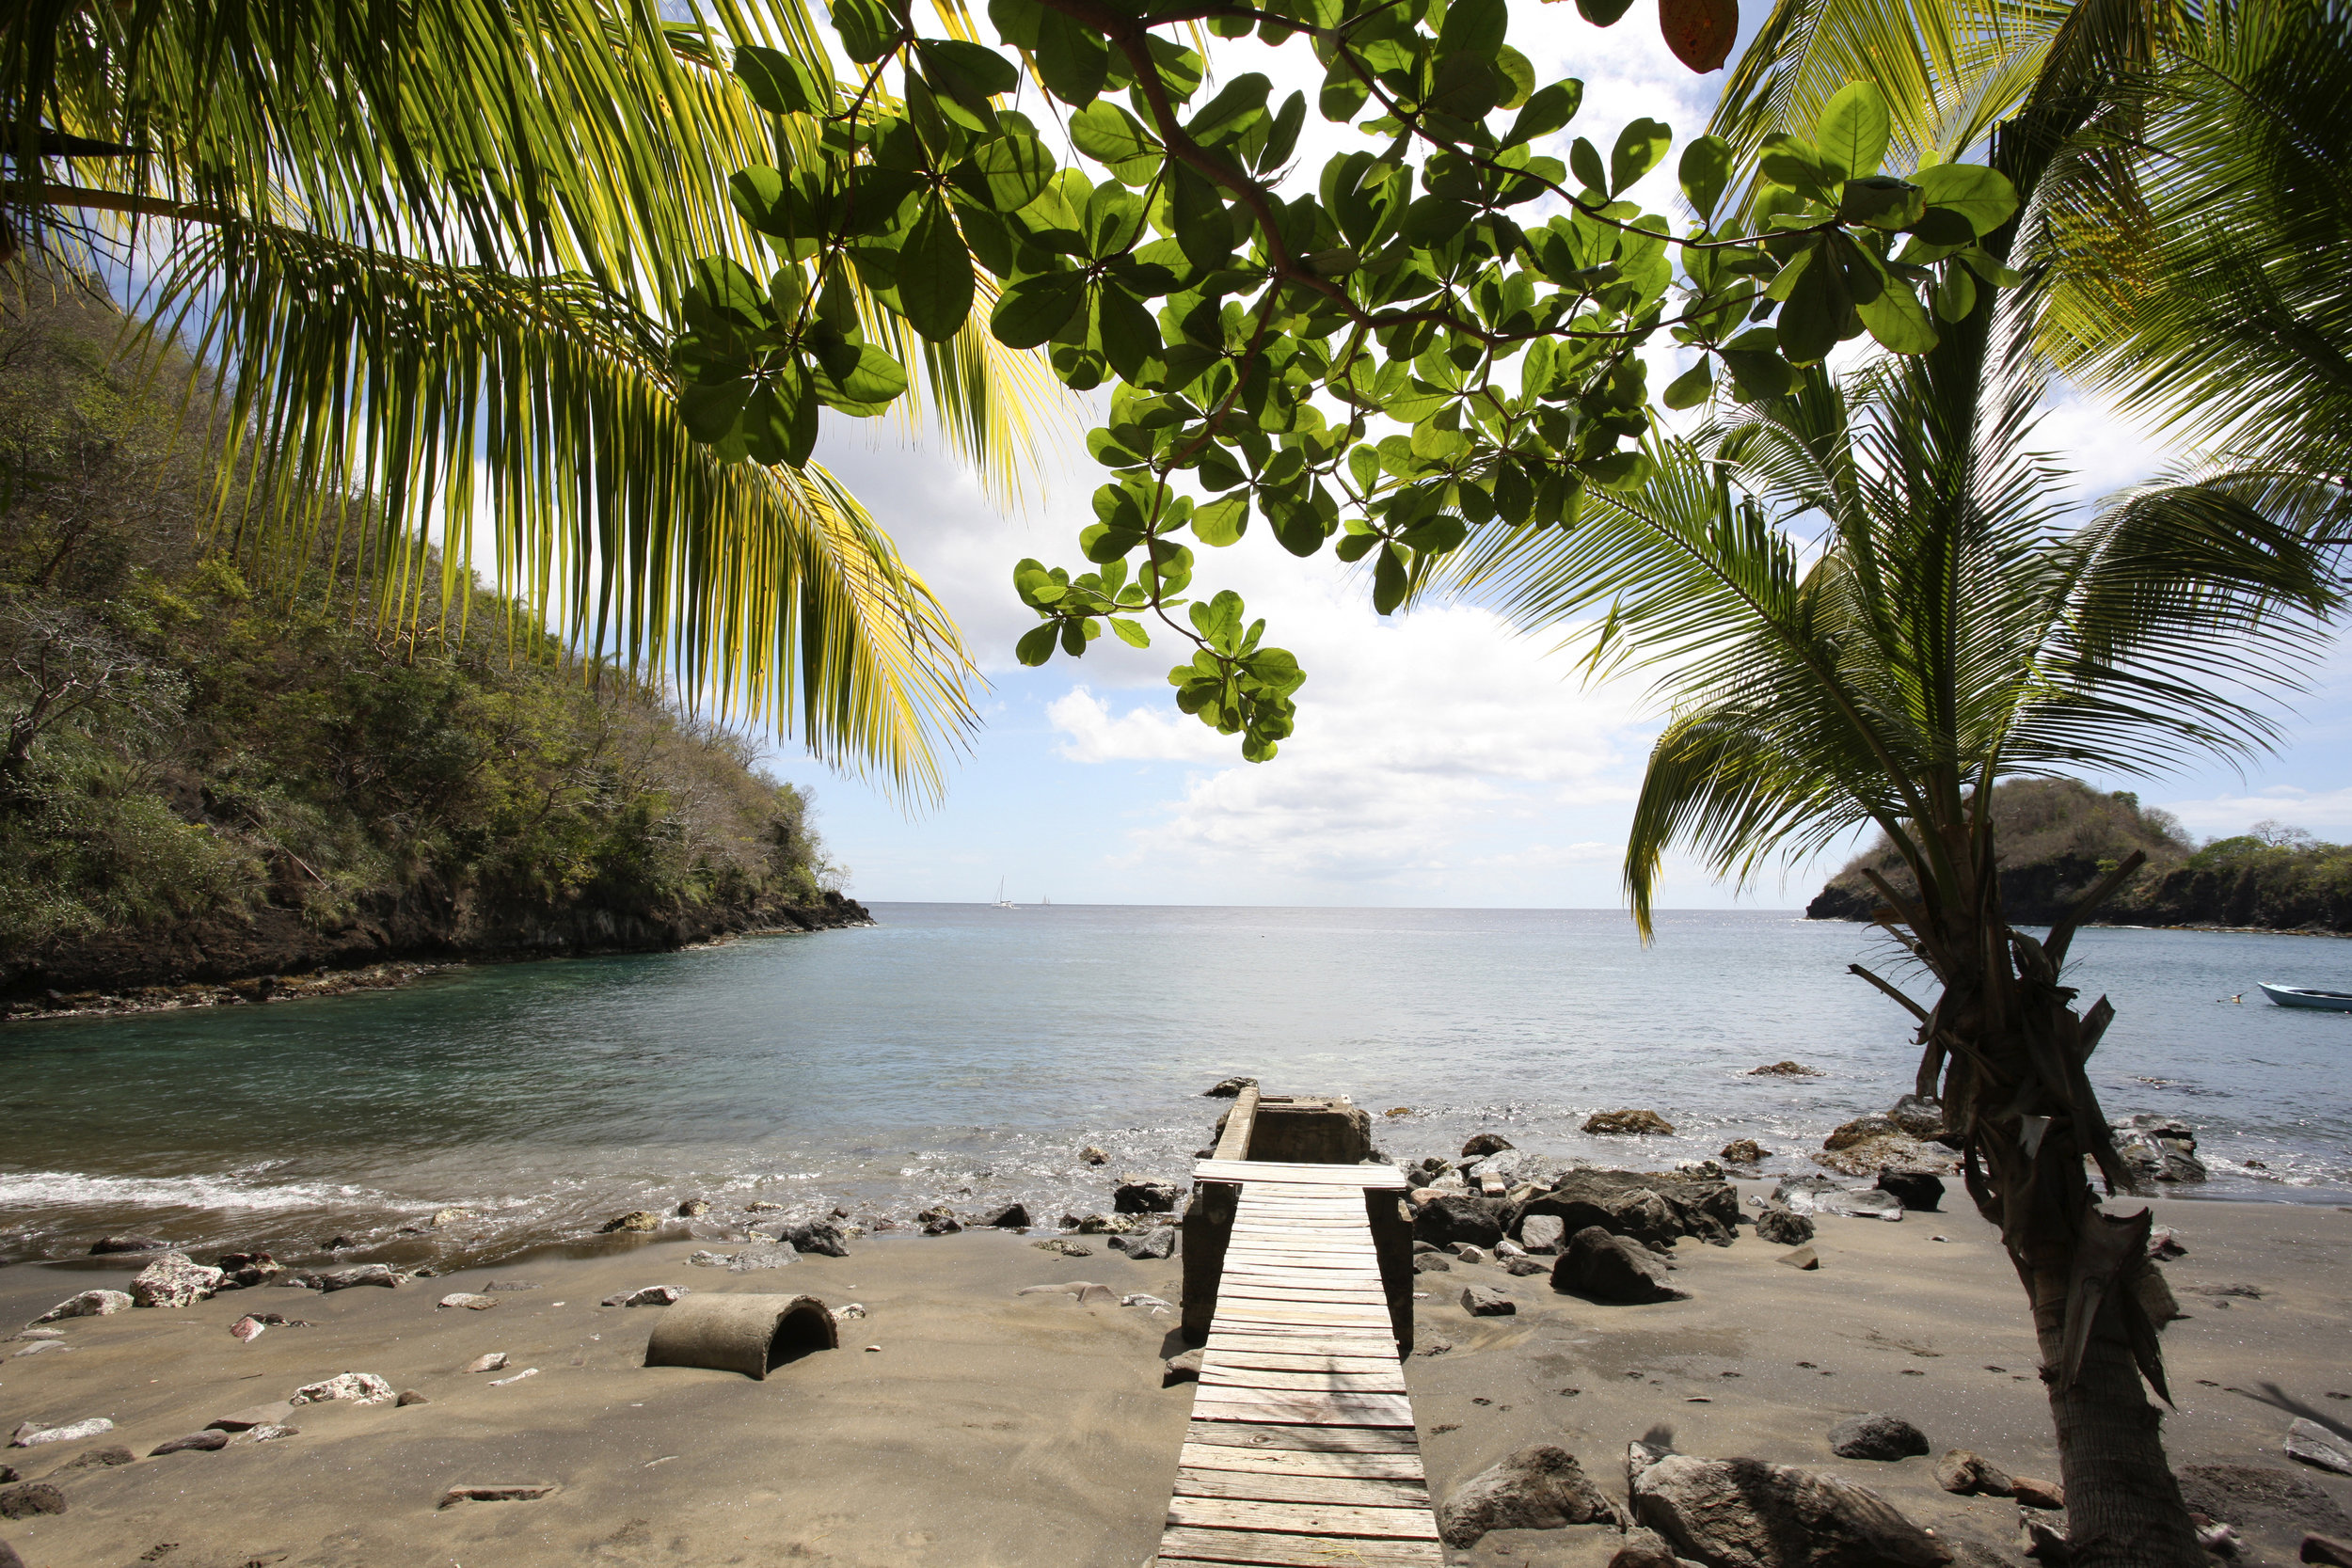 Image courtesy of St. Vincent & the Grenadines Tourist Office/Chris Caldicott 